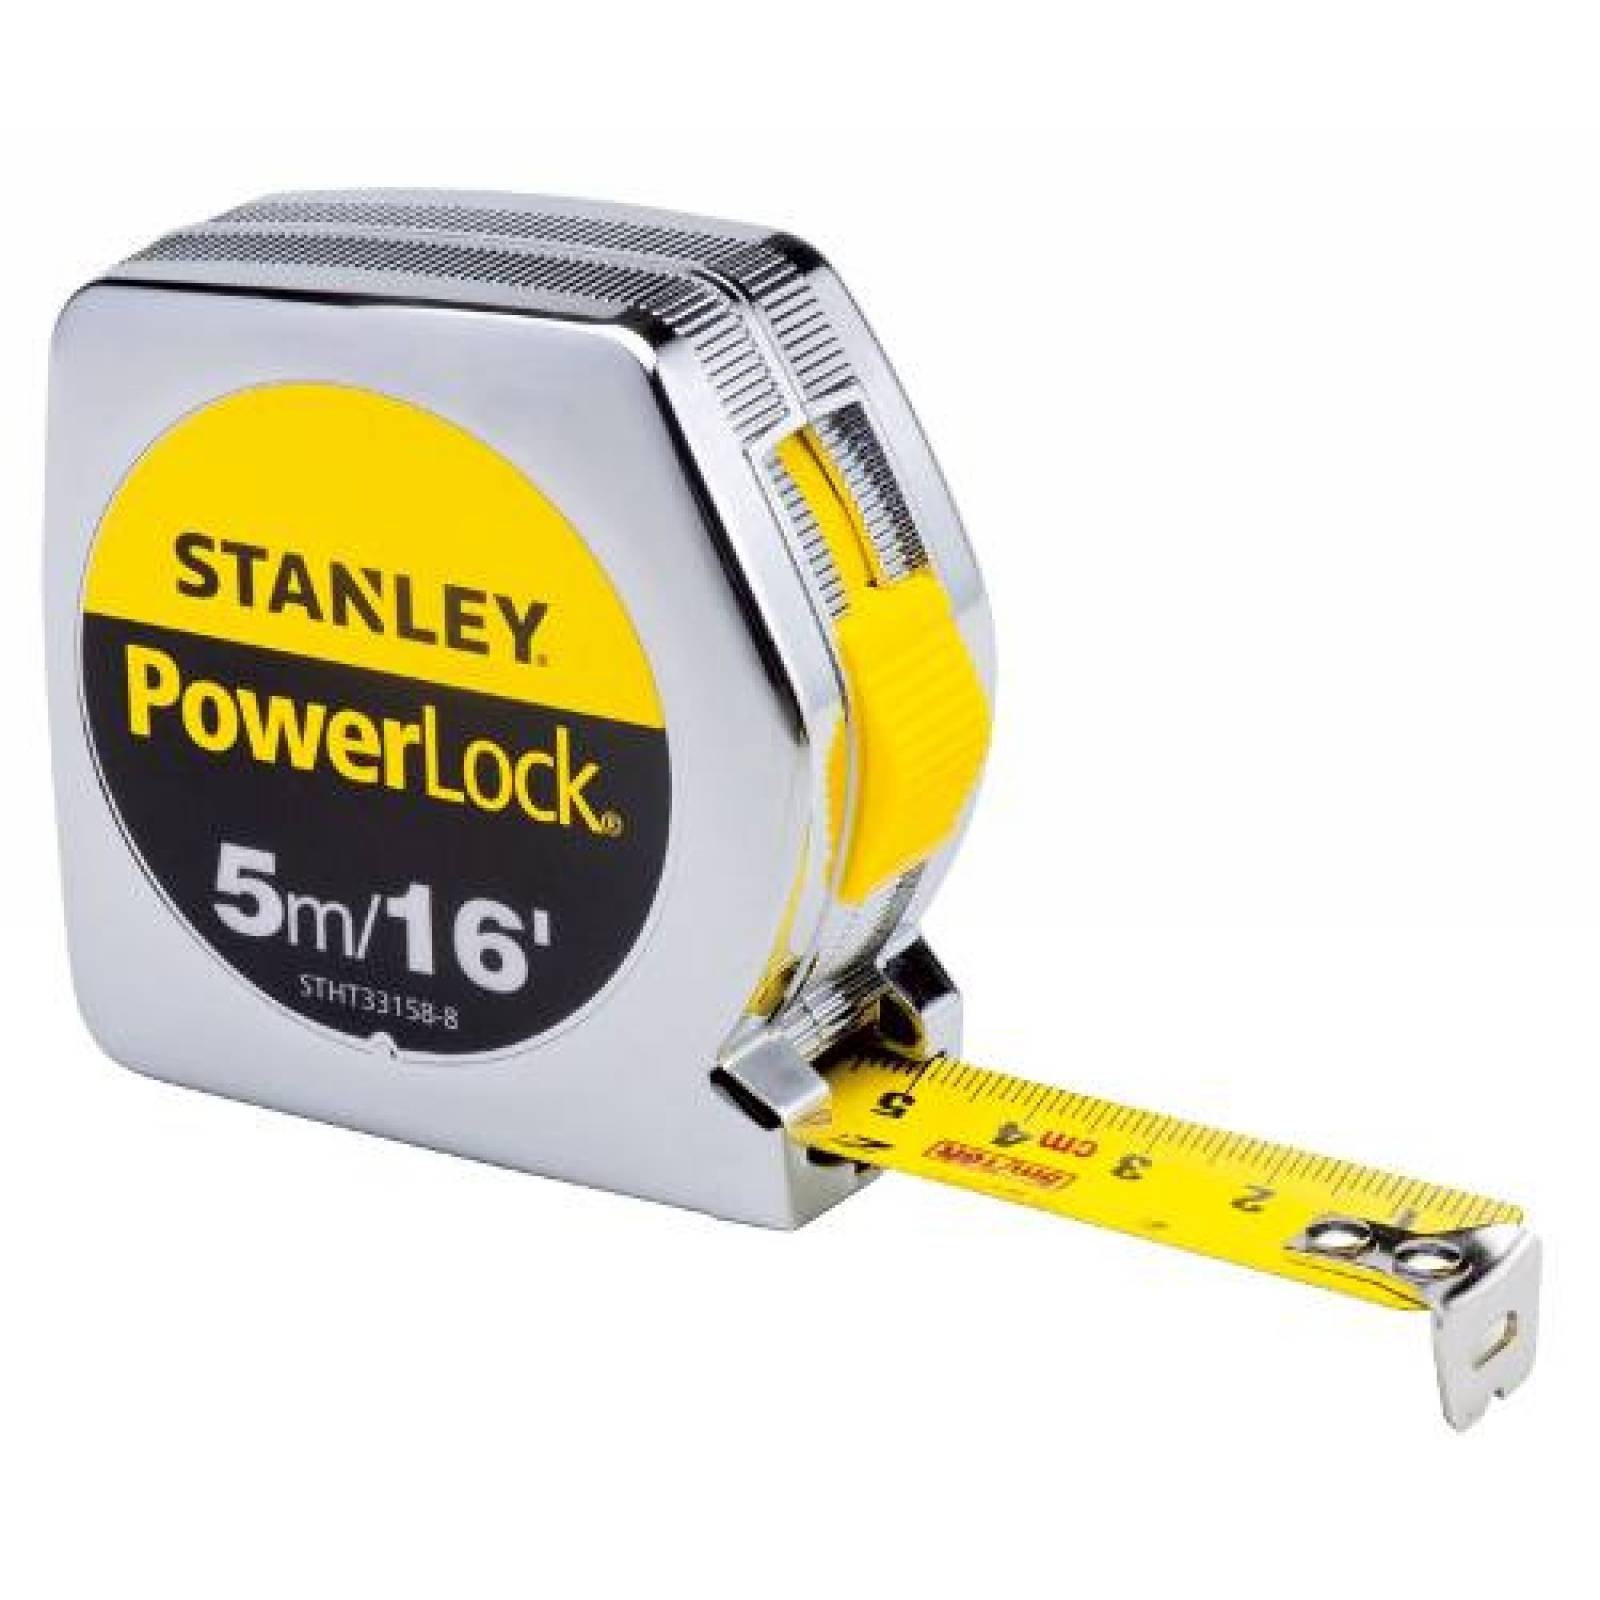 Flexometro Metal 5 Metros Stanley Power Lock P5me Mod.33158